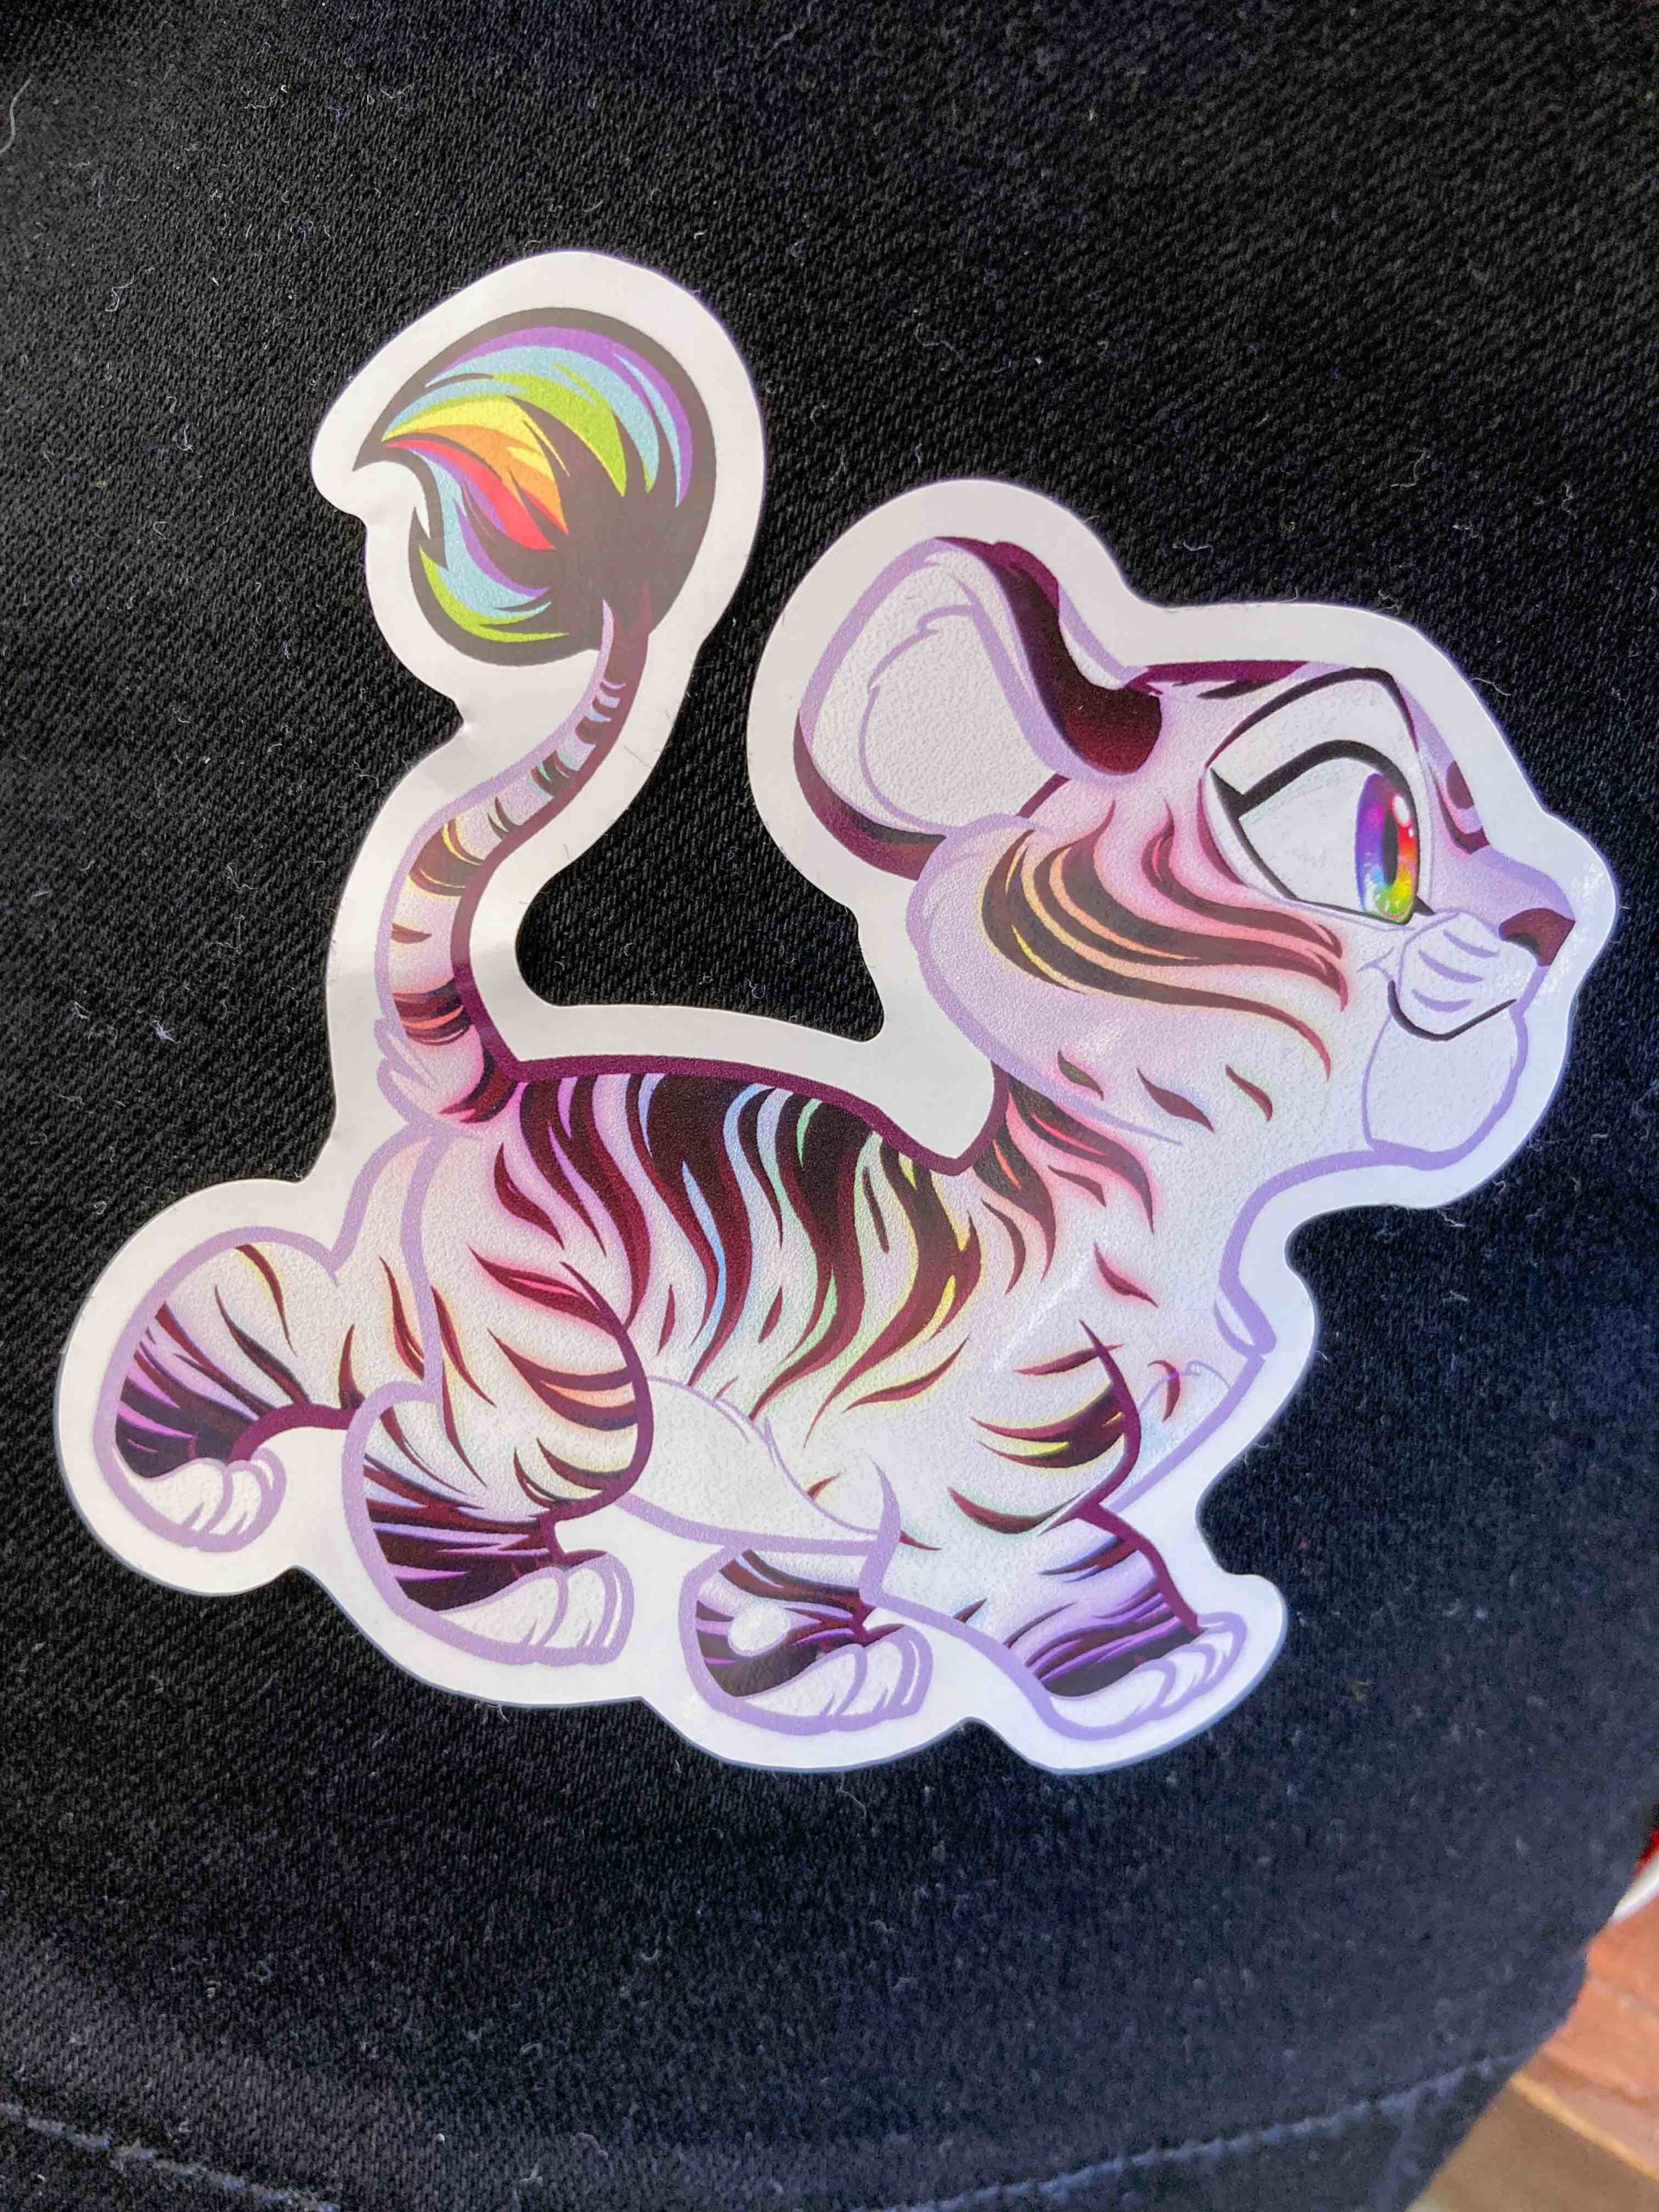 A rainbow pride little lion sticker stuck onto black clothing